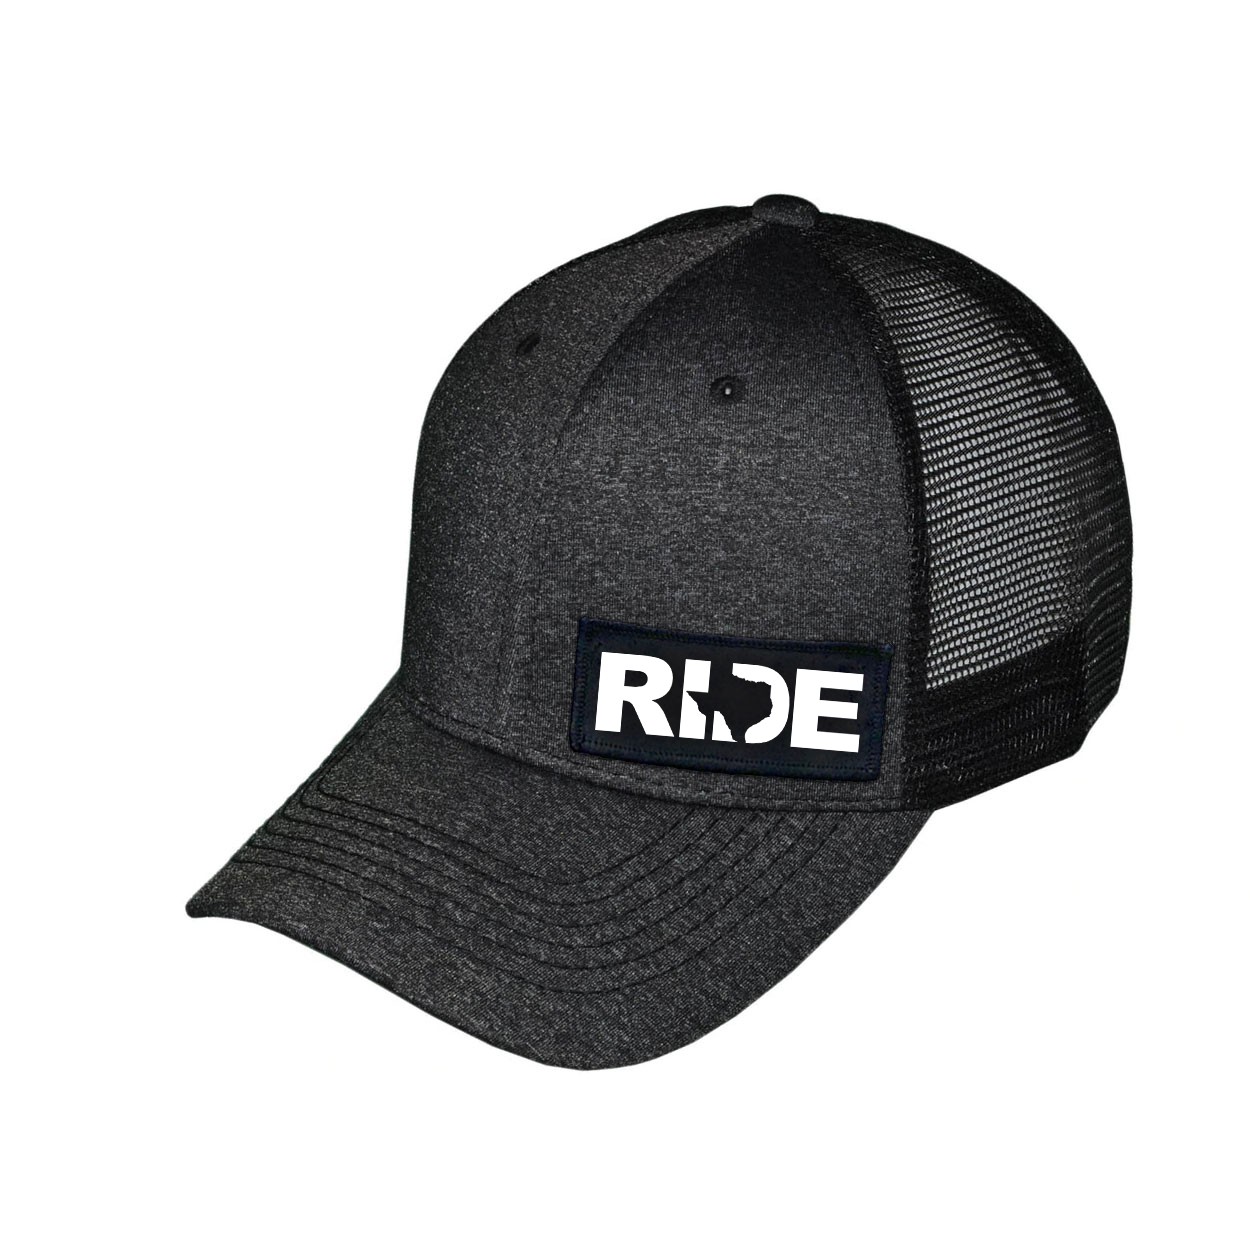 Ride Texas Night Out Woven Patch Melange Snapback Trucker Hat Black (White Logo)